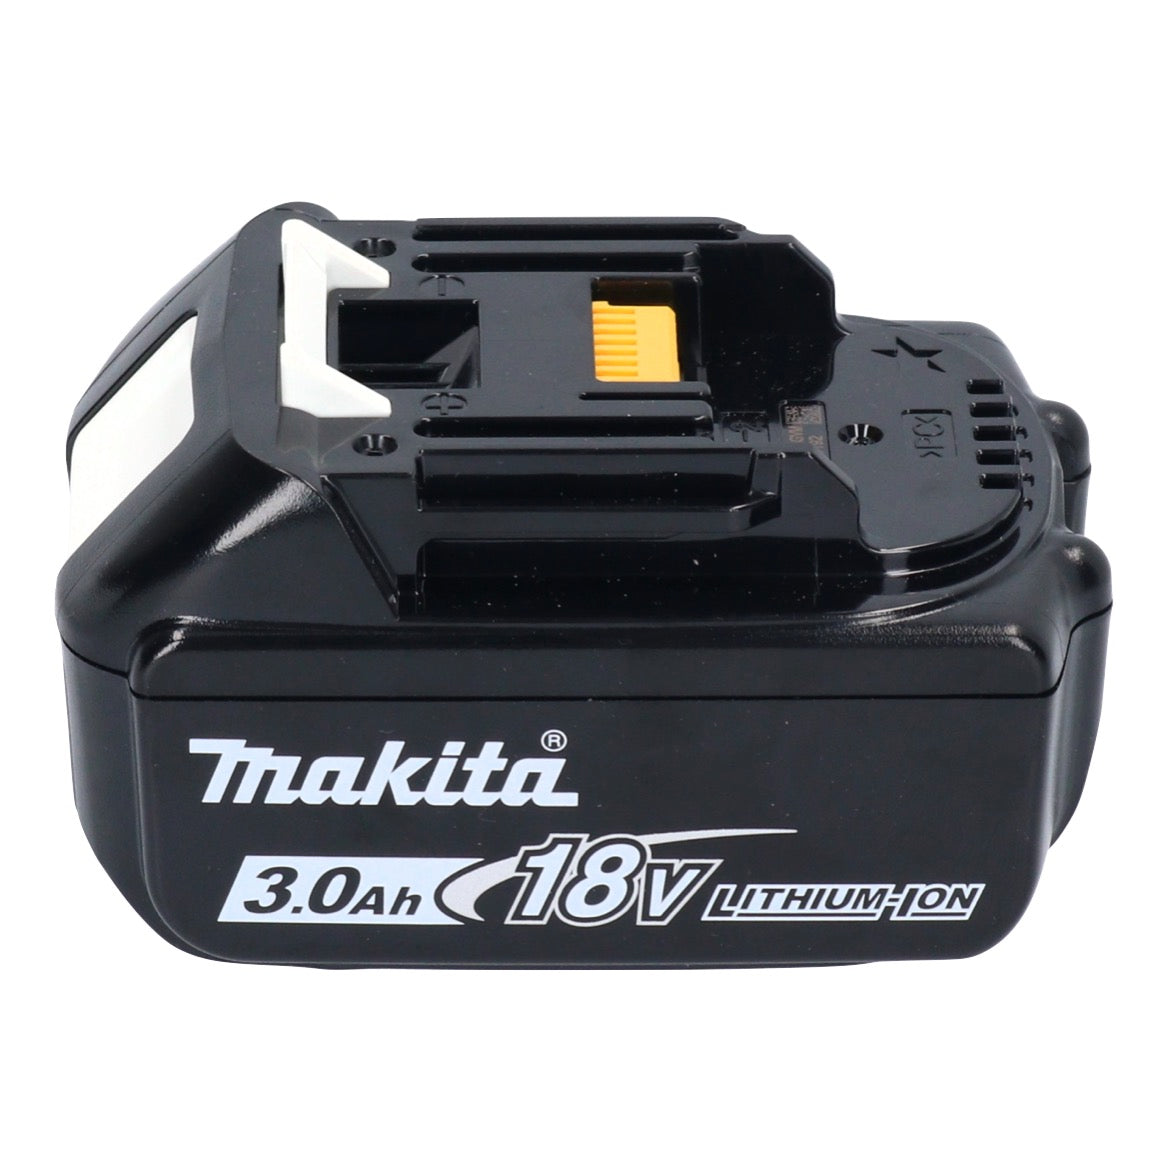 Makita DHP 489 F1J Akku Schlagbohrschrauber 18 V 73 Nm Brushless + 1x Akku 3,0 Ah + Makpac - ohne Ladegerät